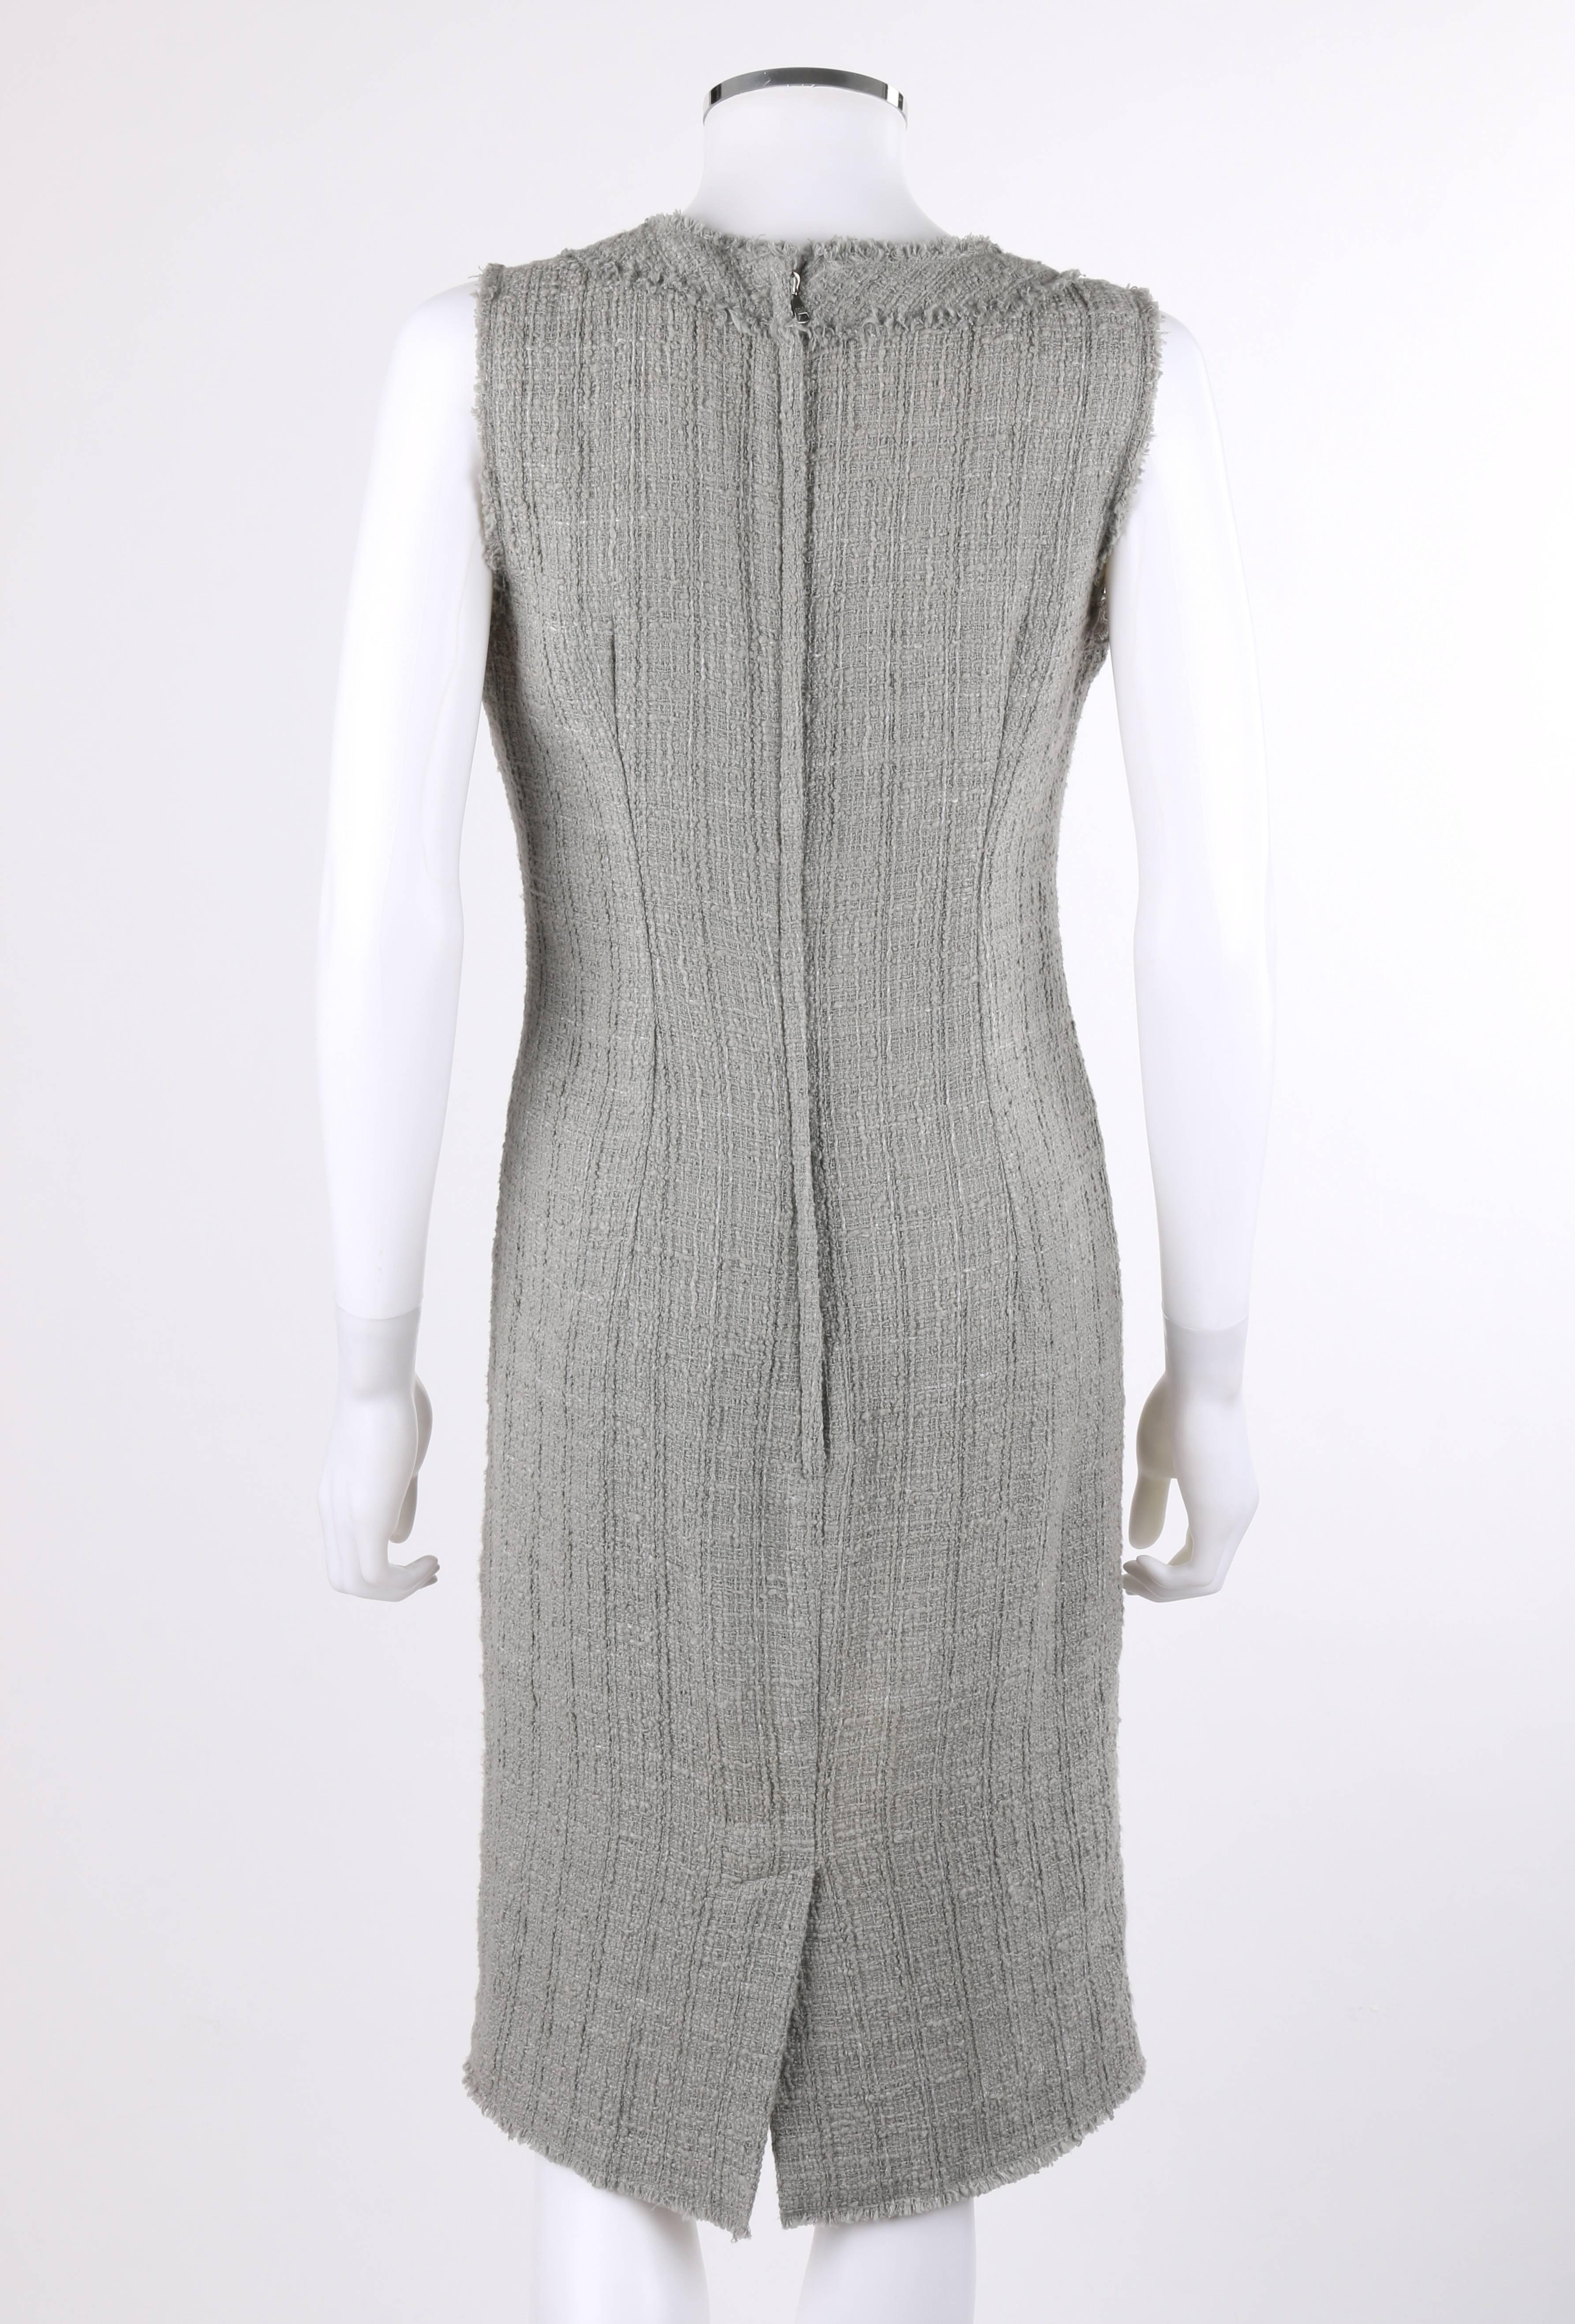 Women's DOLCE & GABBANA A/W 2008 Gray Boucle Tweed Sleeveless Shift Dress